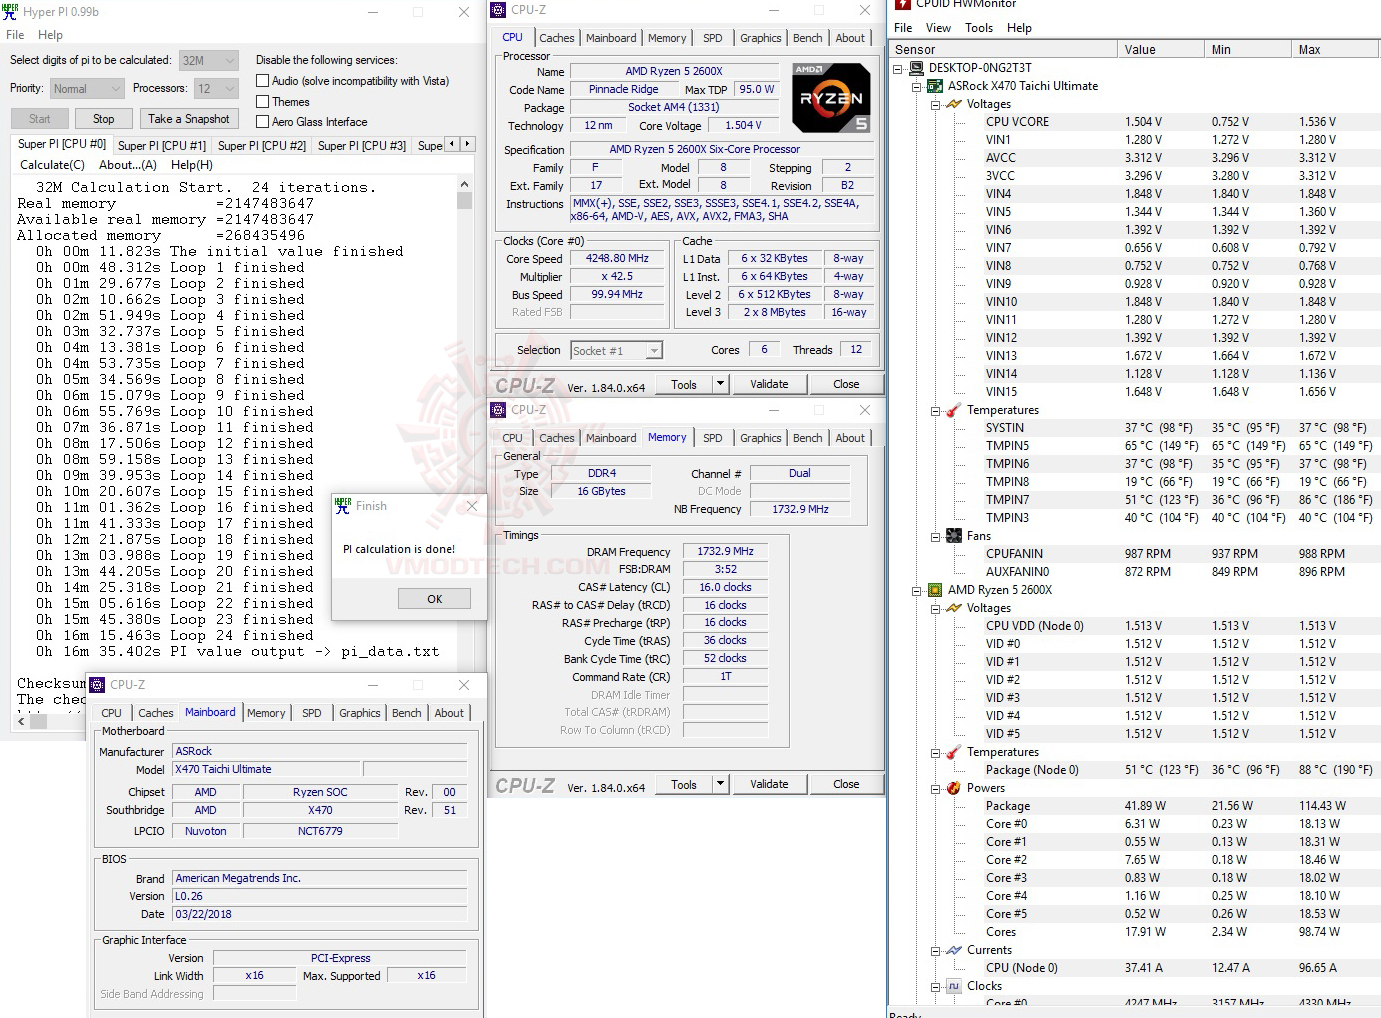 h32 oc AMD RYZEN 5 2600X PROCESSOR REVIEW